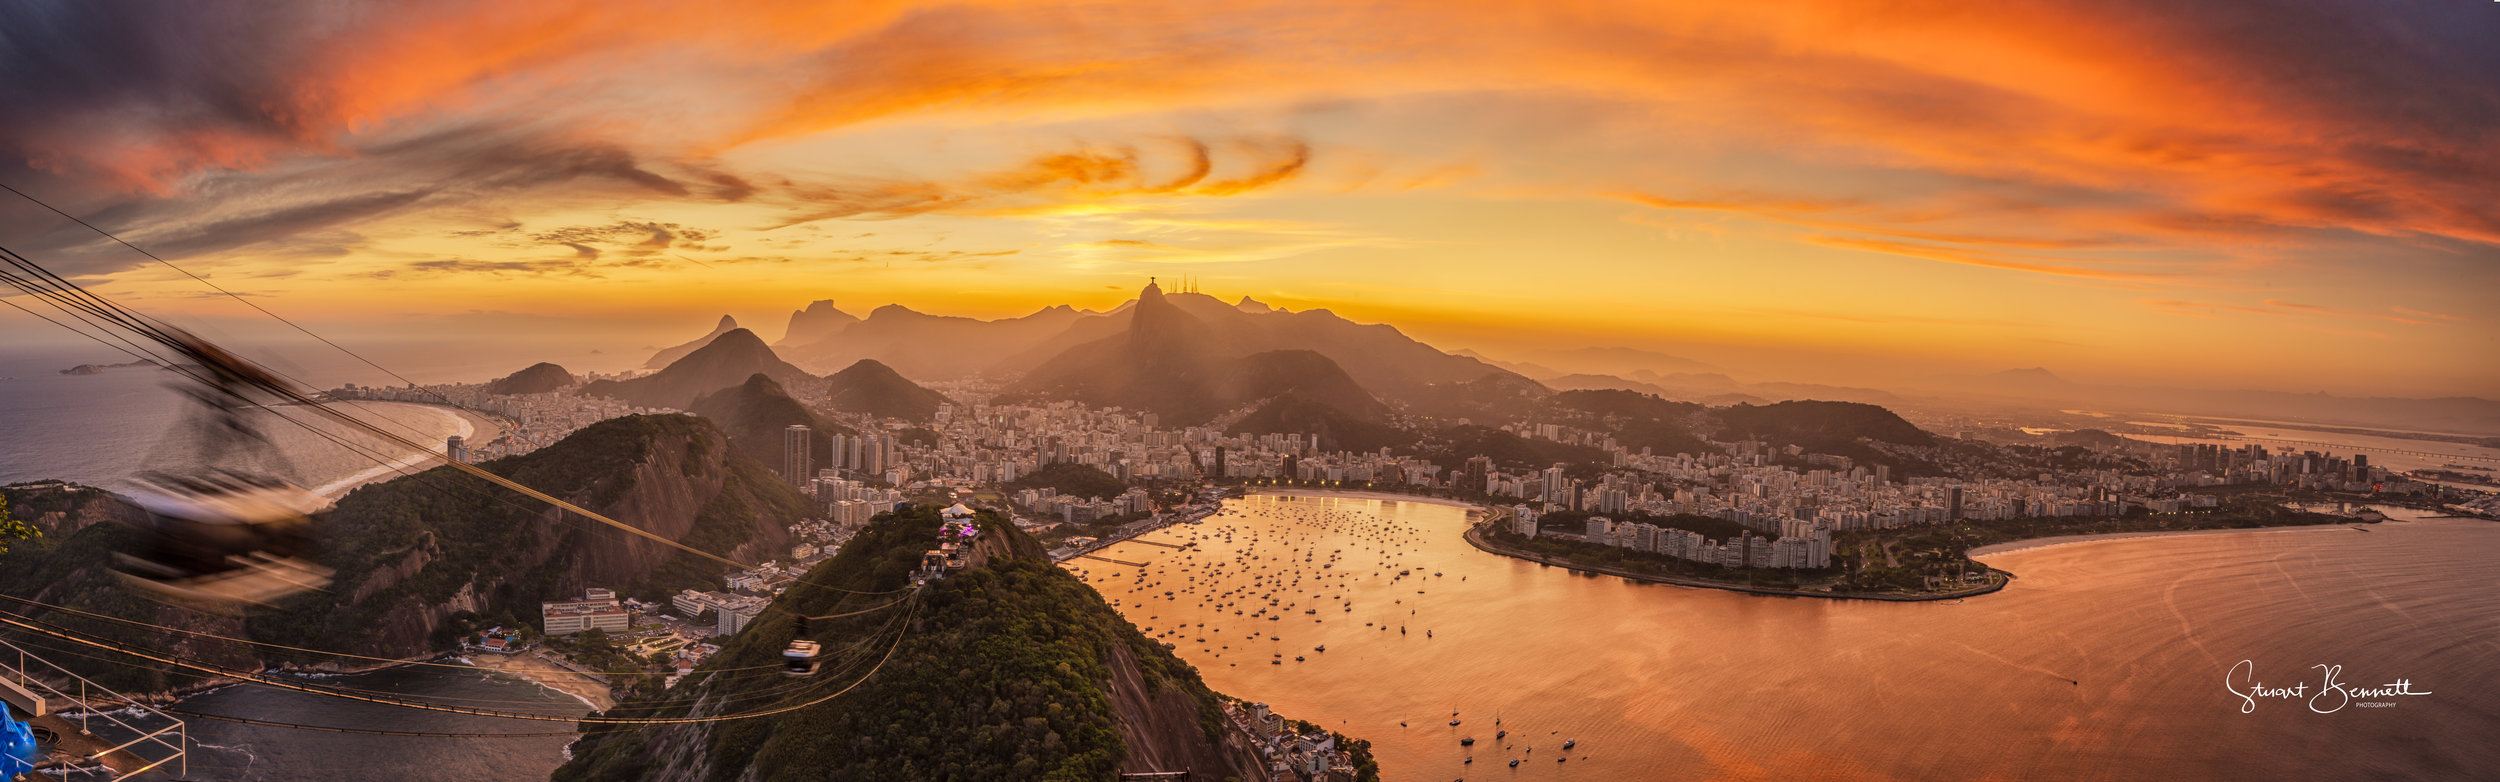 20151007-Rio De Janiero Sunset.JPG